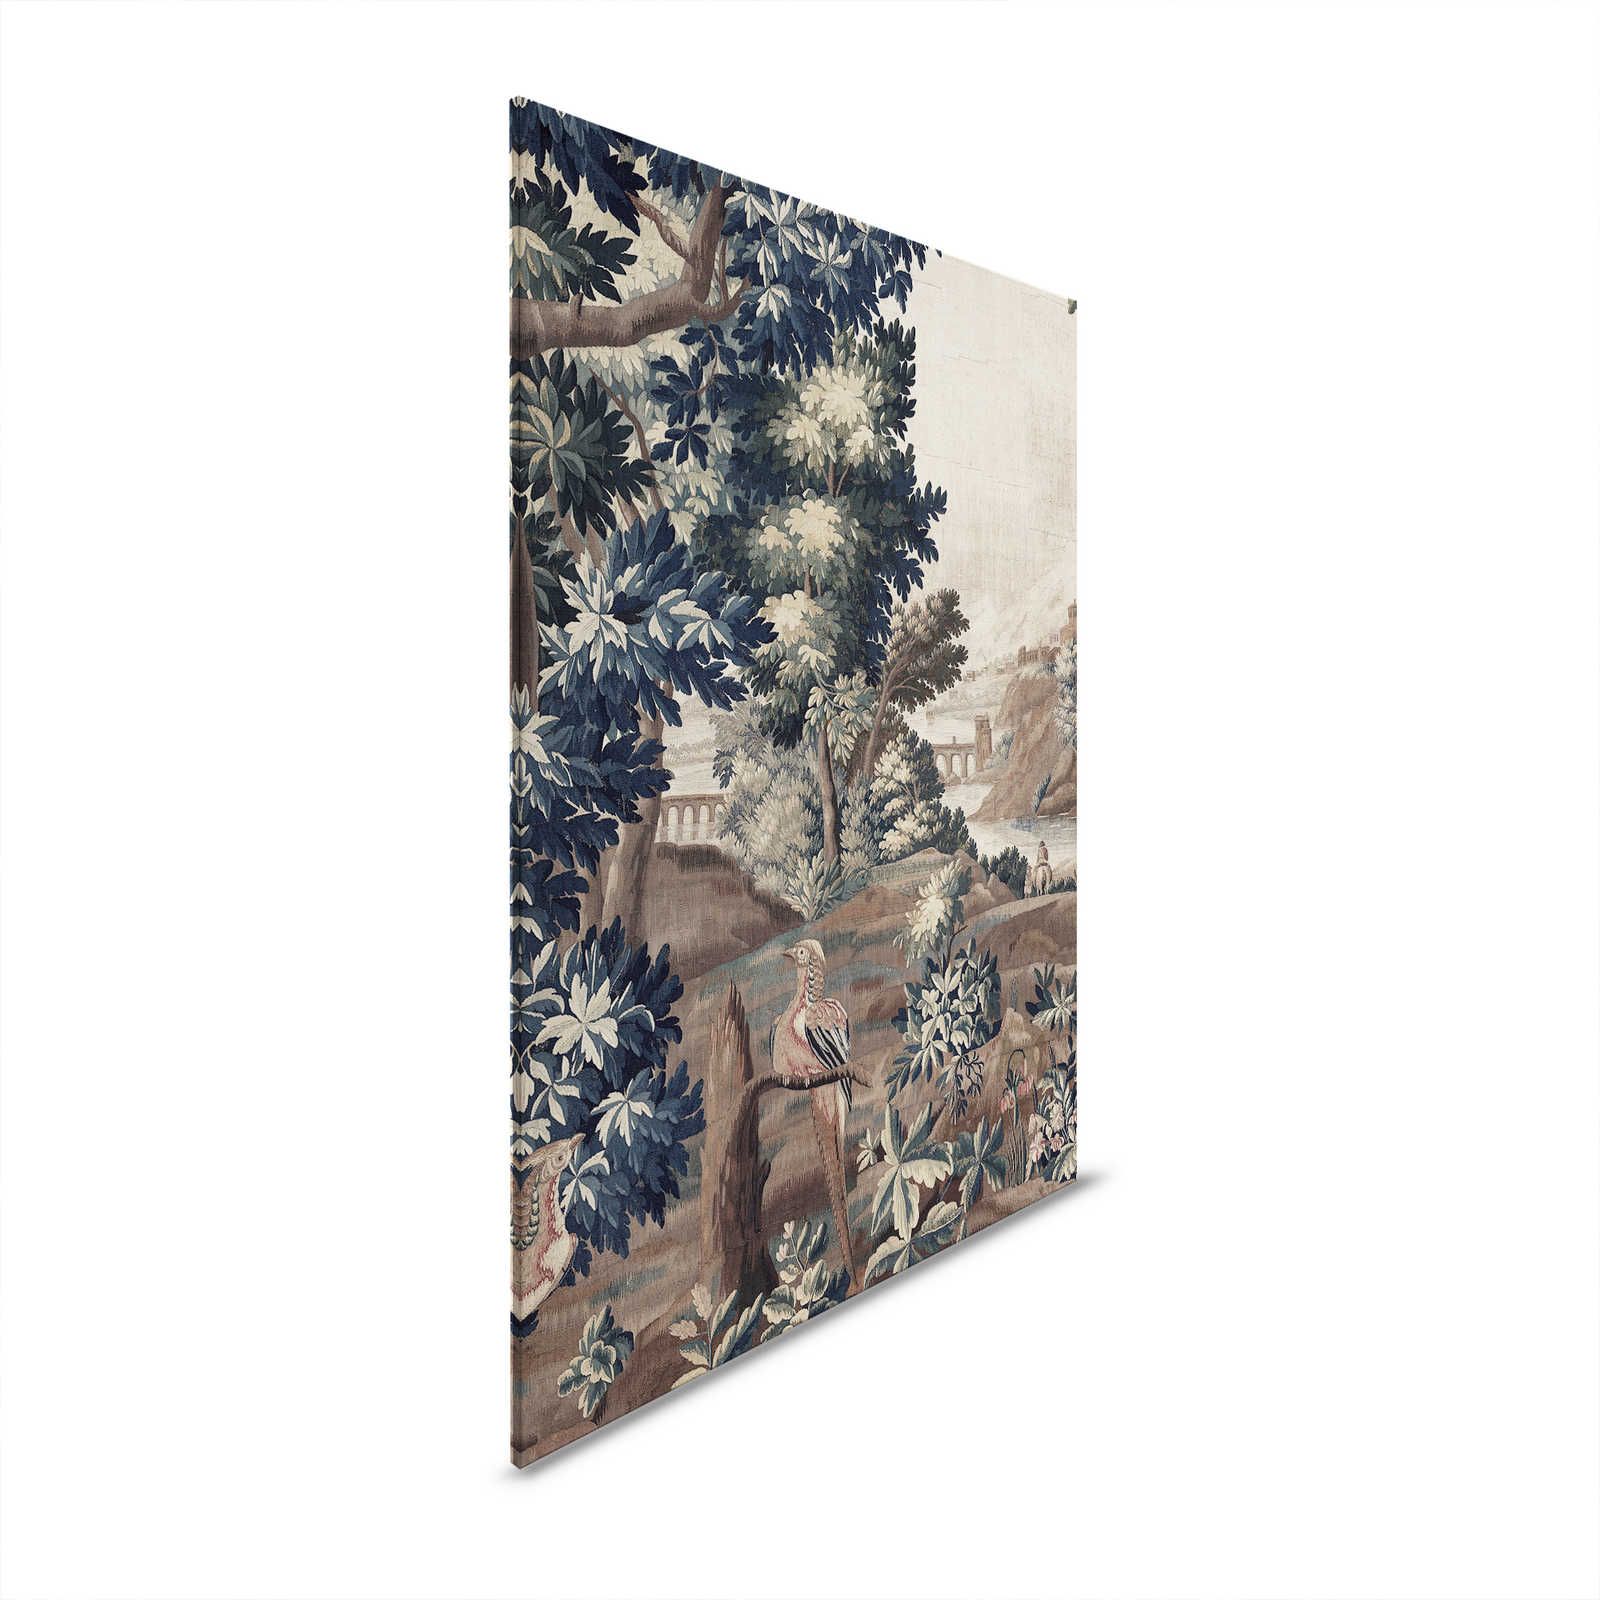 Gobelin Gallery 2 - Cuadro tapiz estilo arte clásico - 0,90 m x 0,60 m
